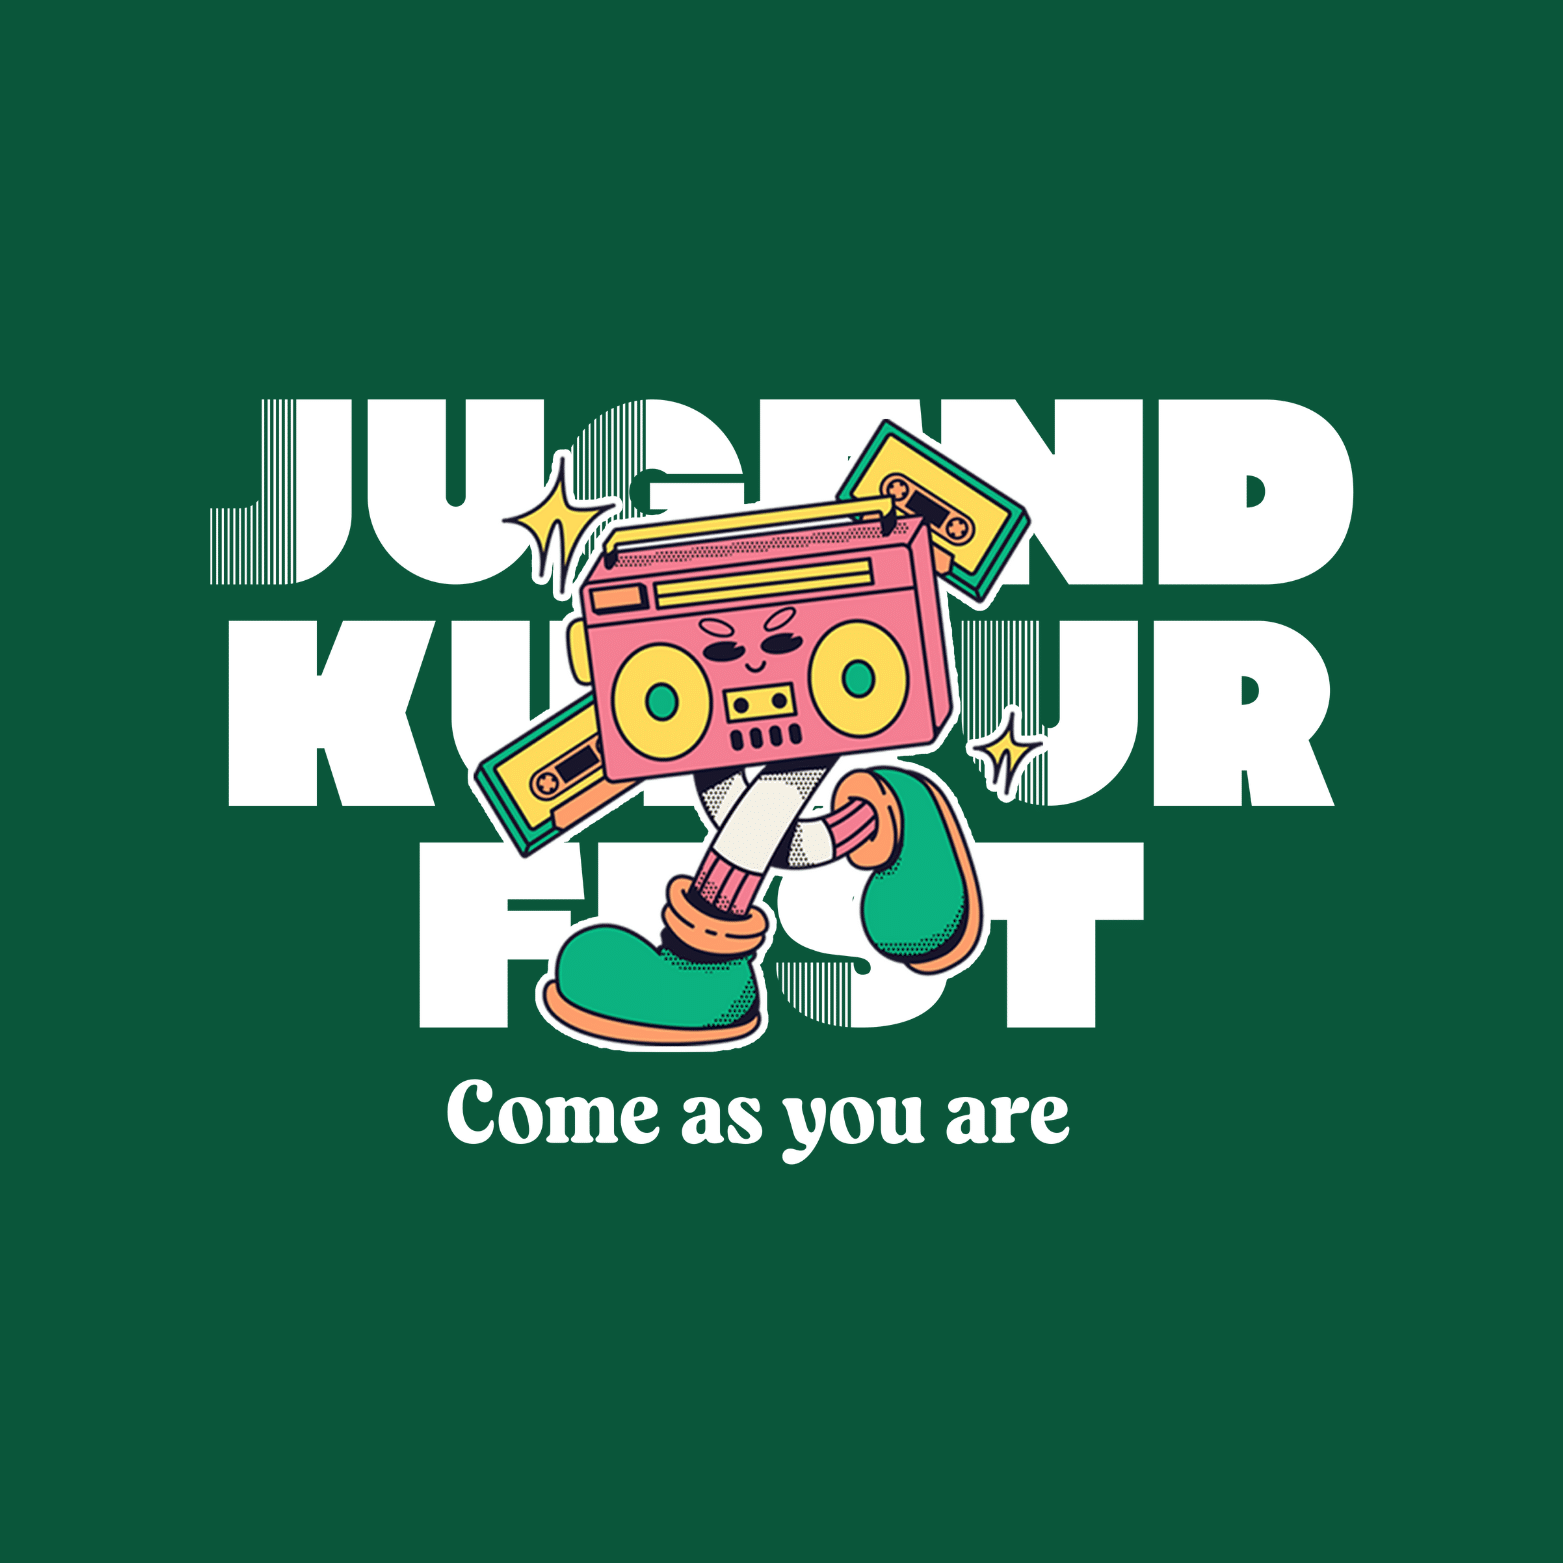 „Jugend Kultur Fest - Come as you are!“